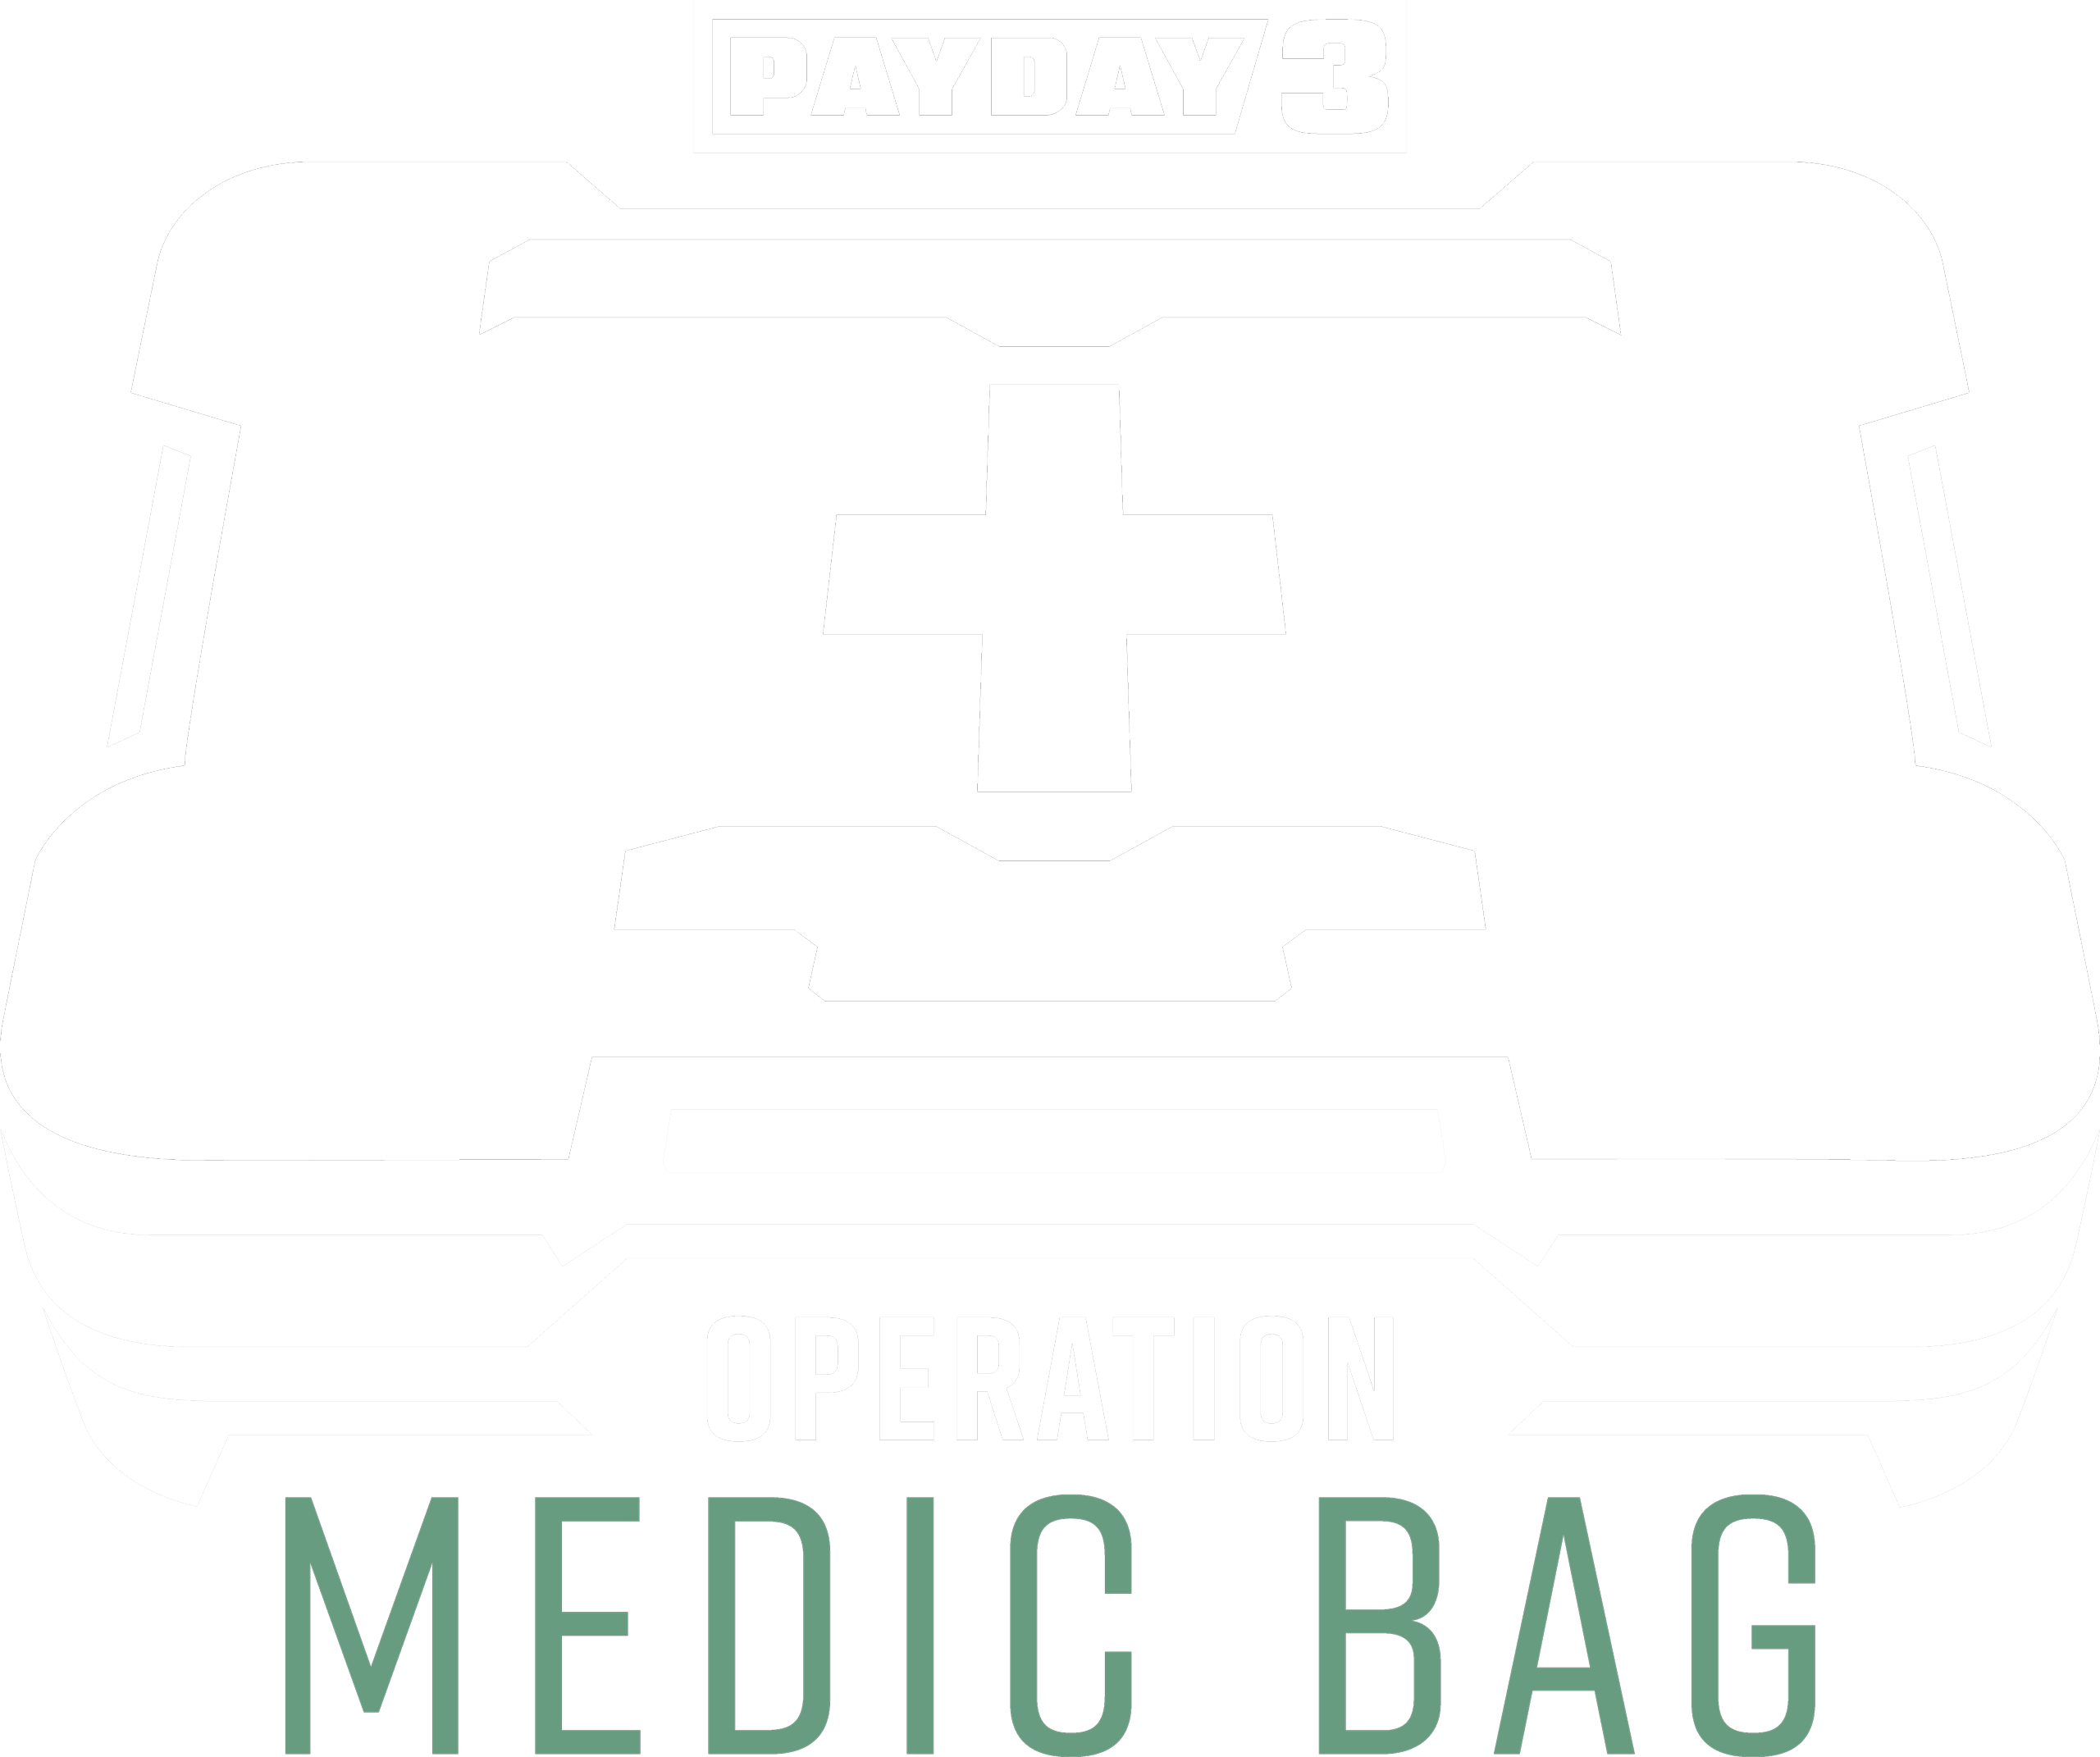 PAYDAY 3: Operation Medic Bag